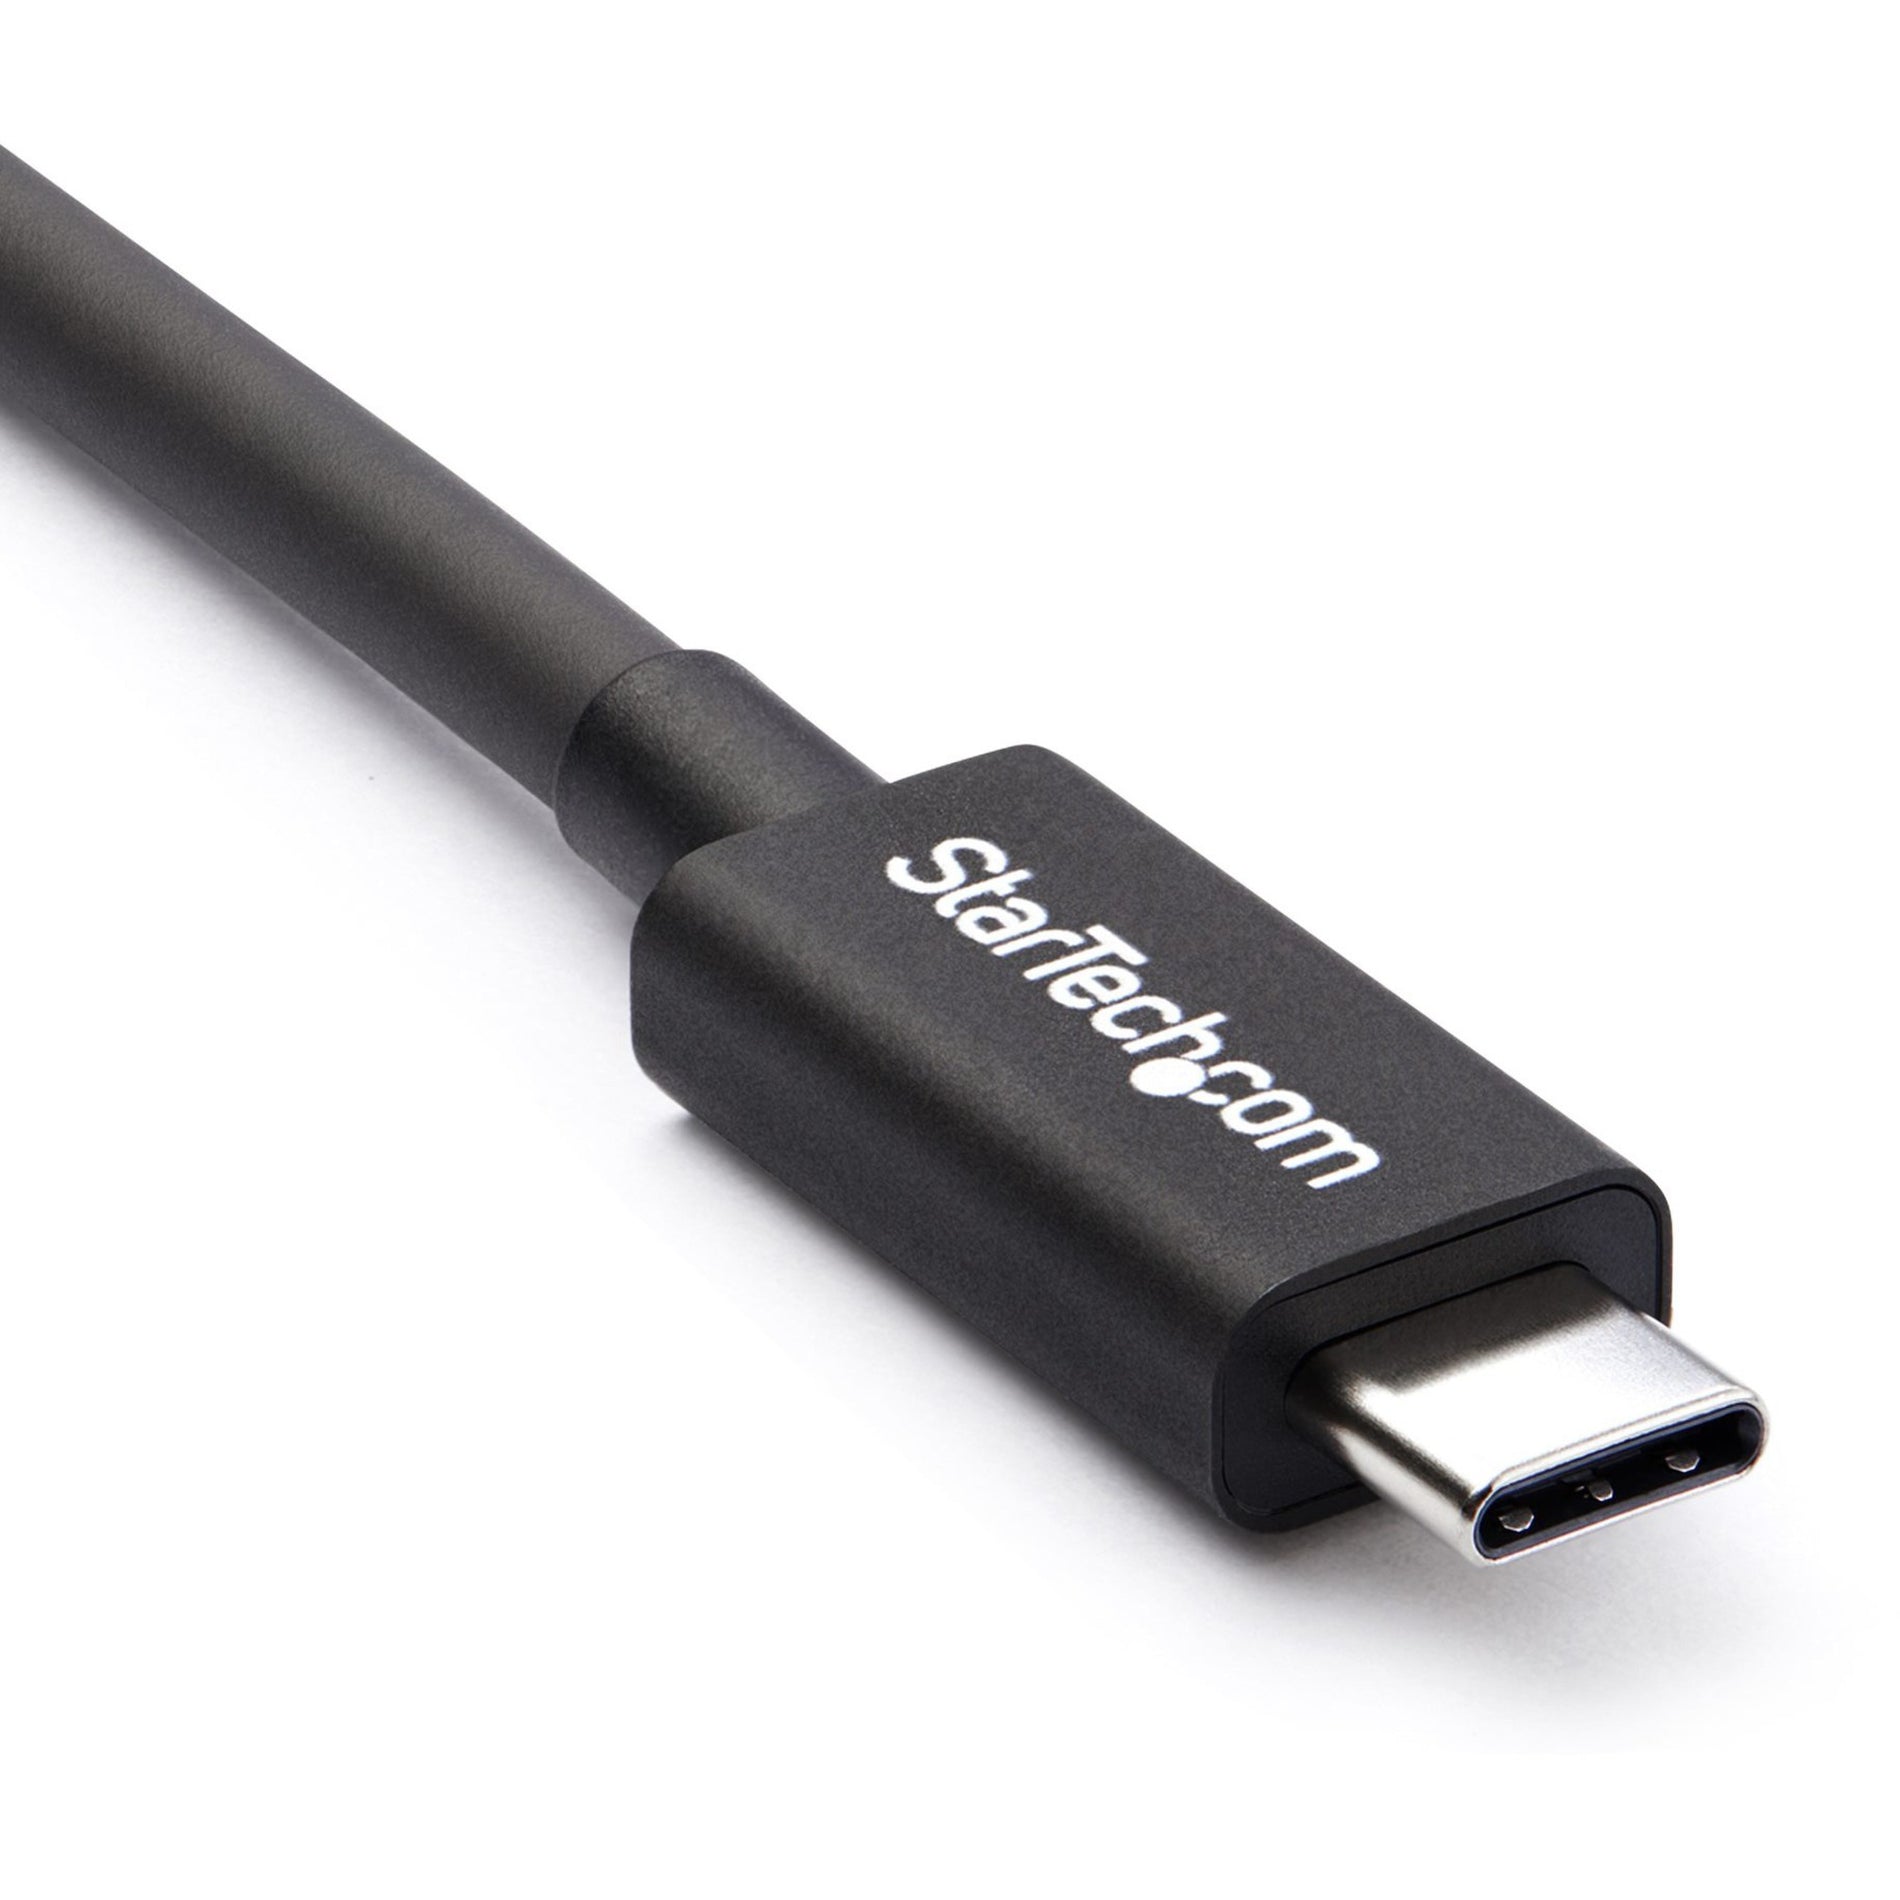 StarTech.com TBLT3MM2M 2m Thunderbolt 3 (20Gbps) USB-C Cable, Thunderbolt, USB, and DisplayPort Compatible